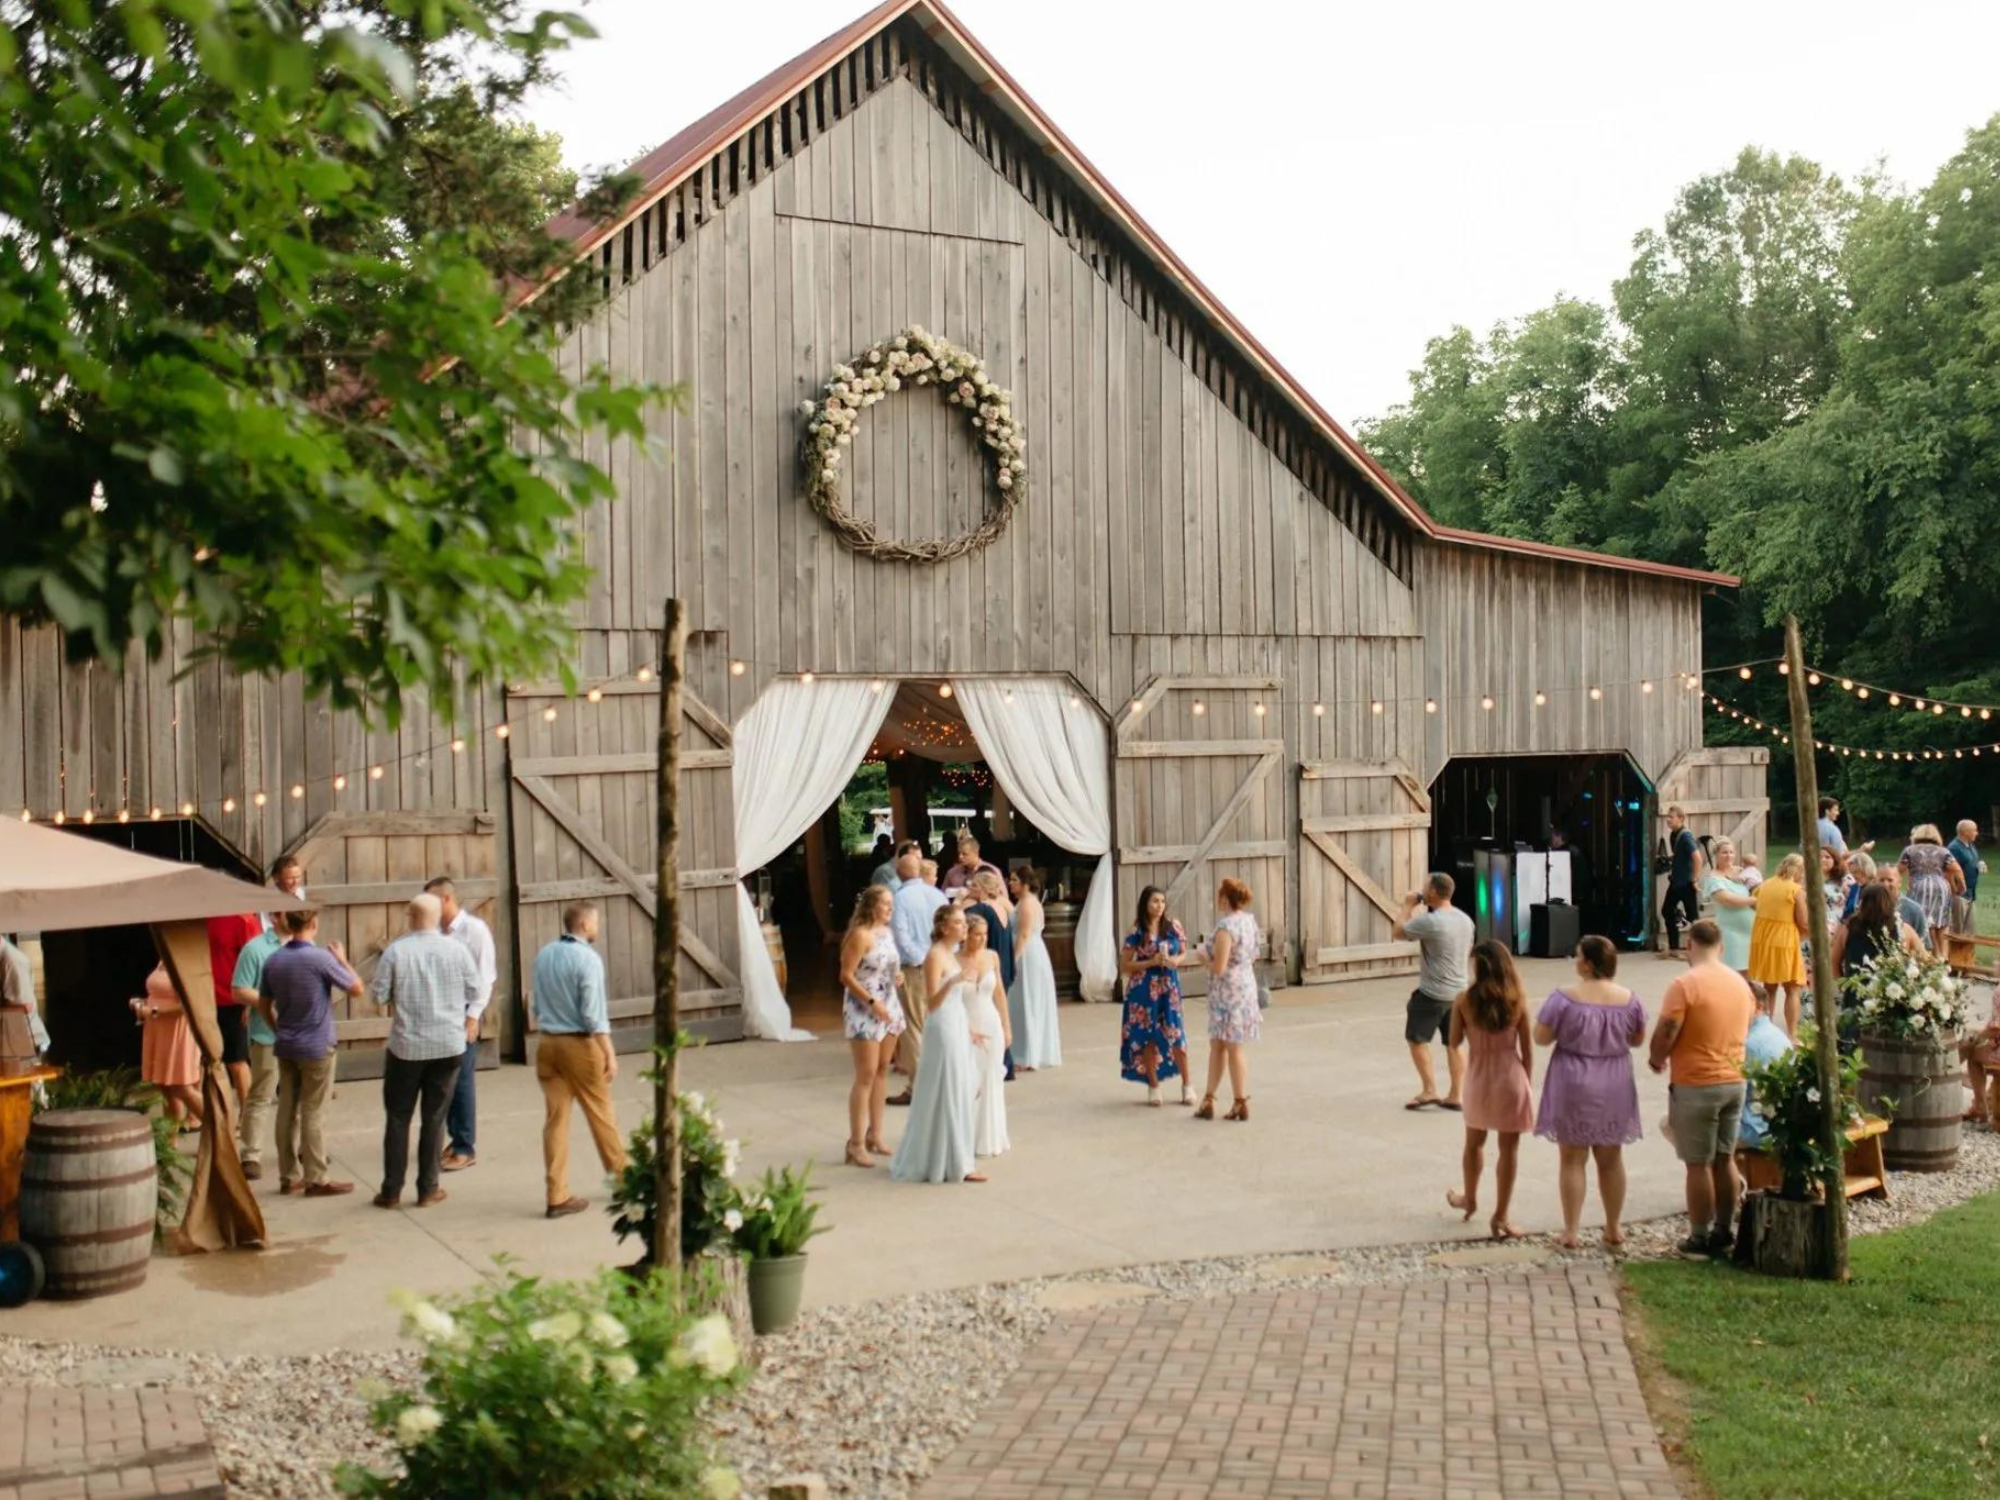 The Barn at Cedar Grove barn wedding venue in Greensburg, Kentucky